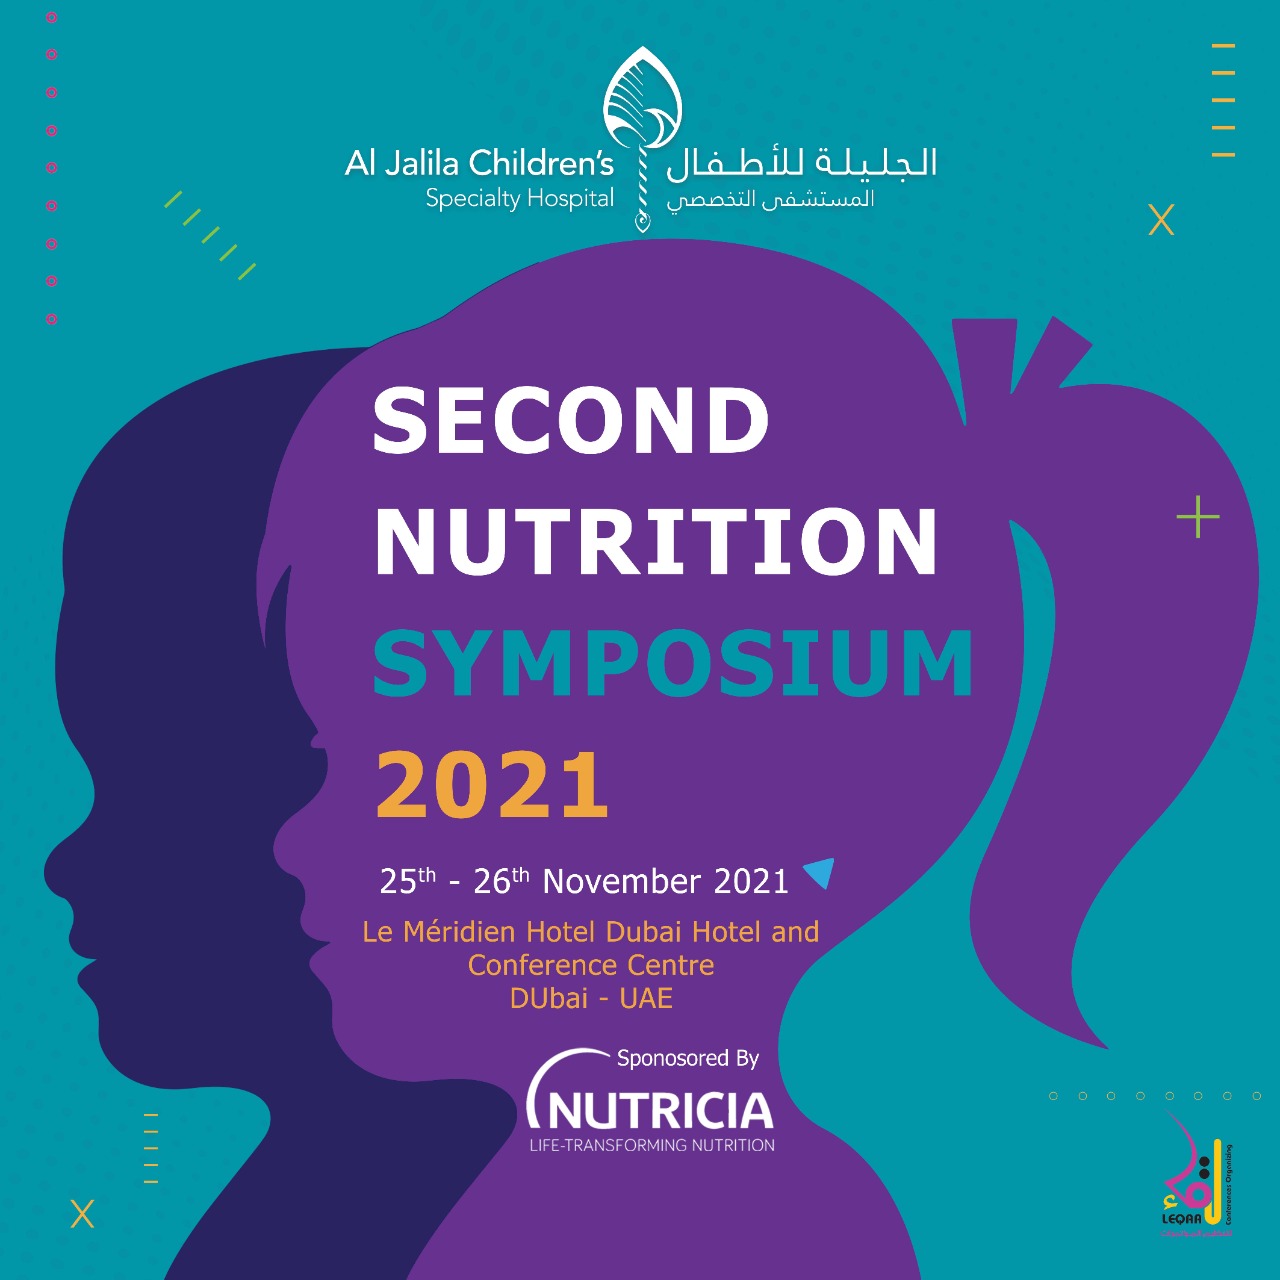 Second Nutrition Symposium 2021